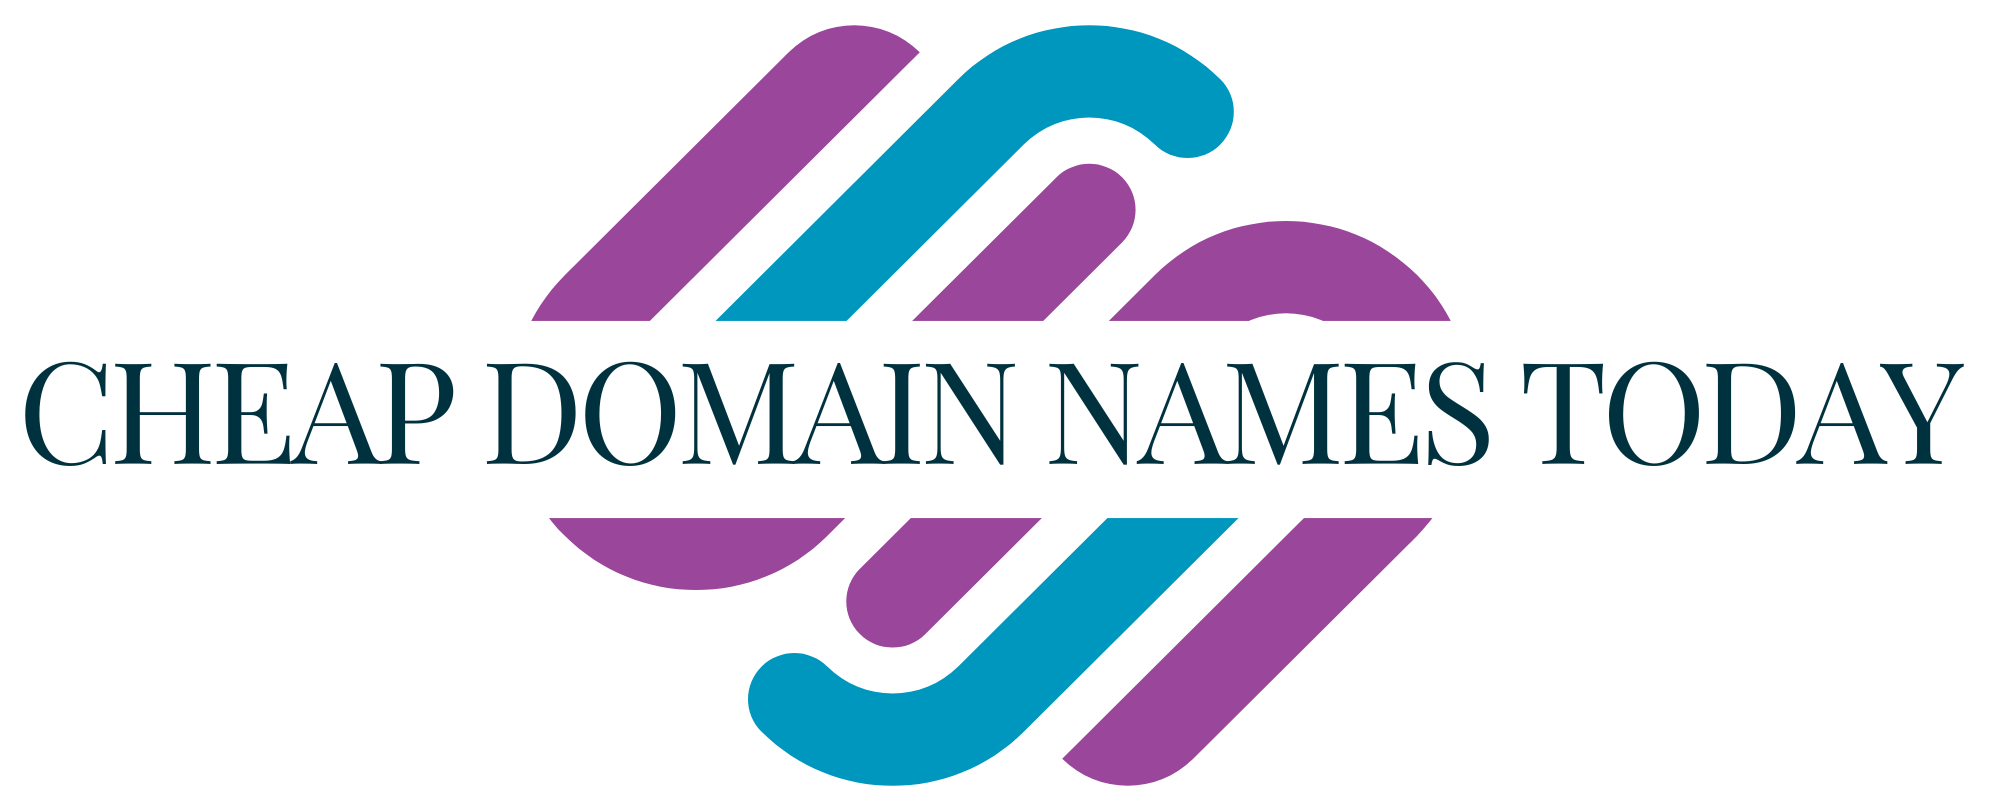 Cheap Domain Names Today